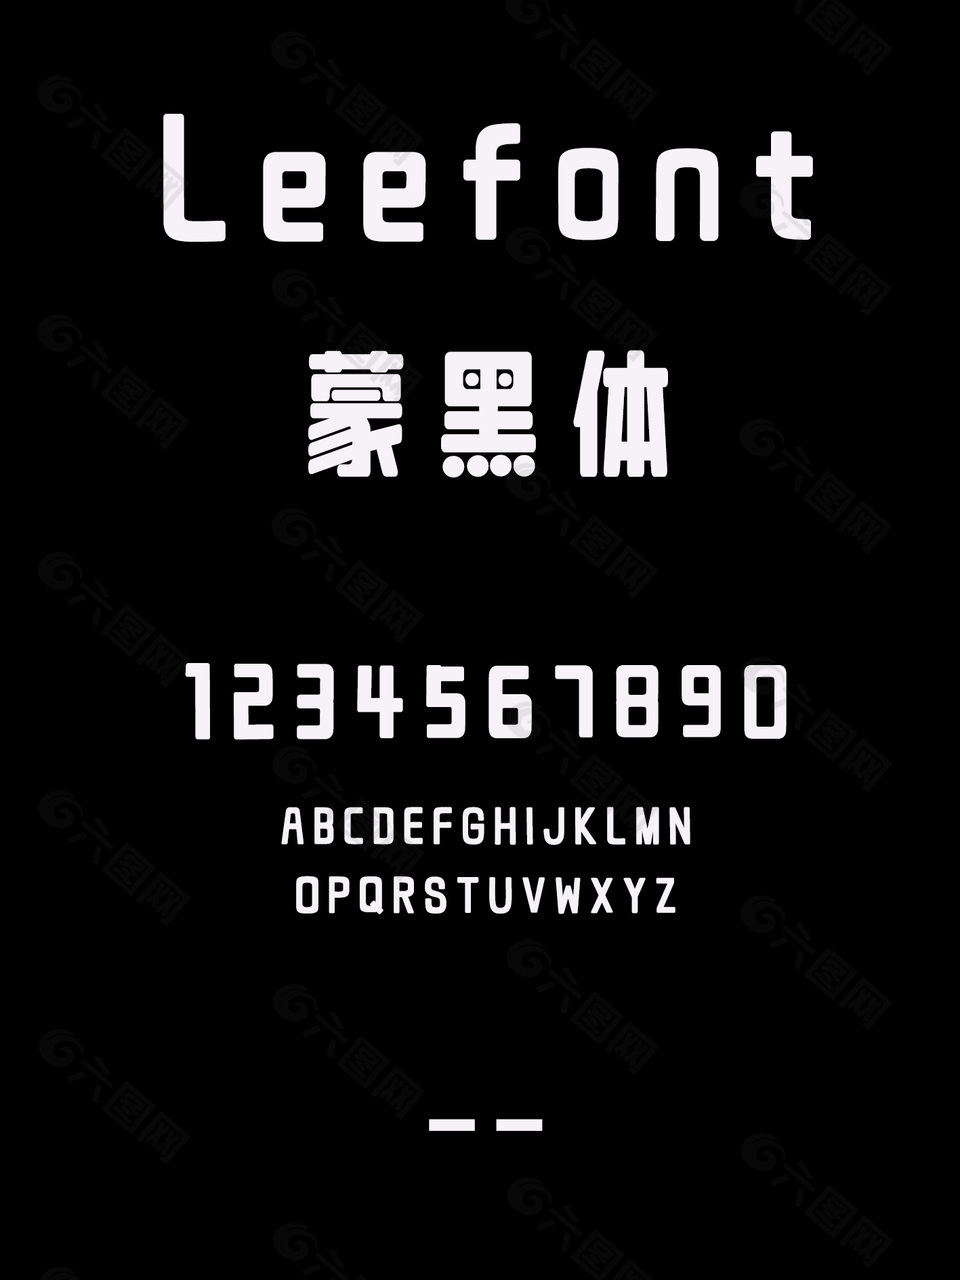 Leefont蒙黑体创意字体安装包